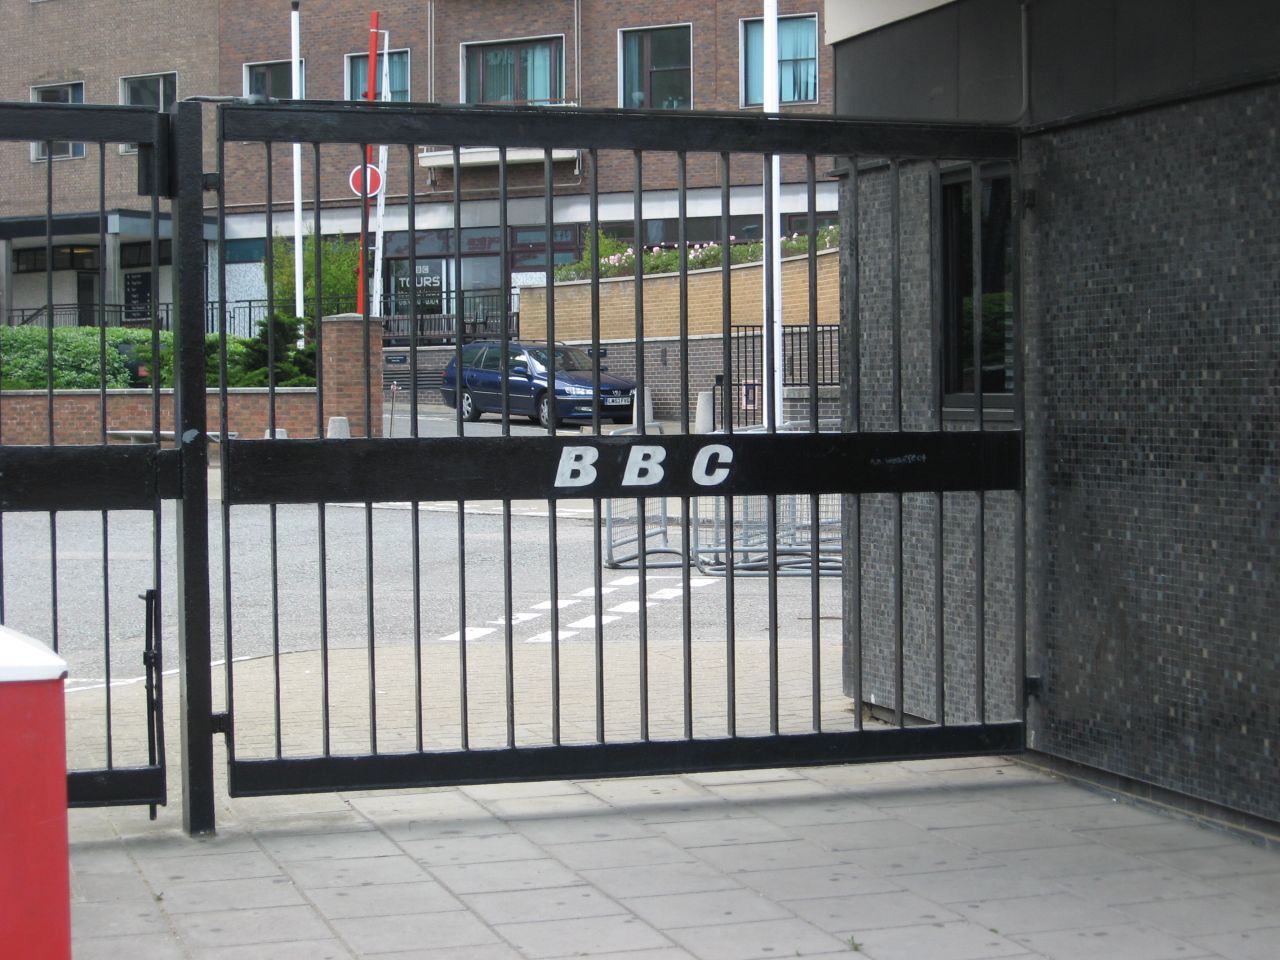 black gate on sidewalk near parking lot in urban setting